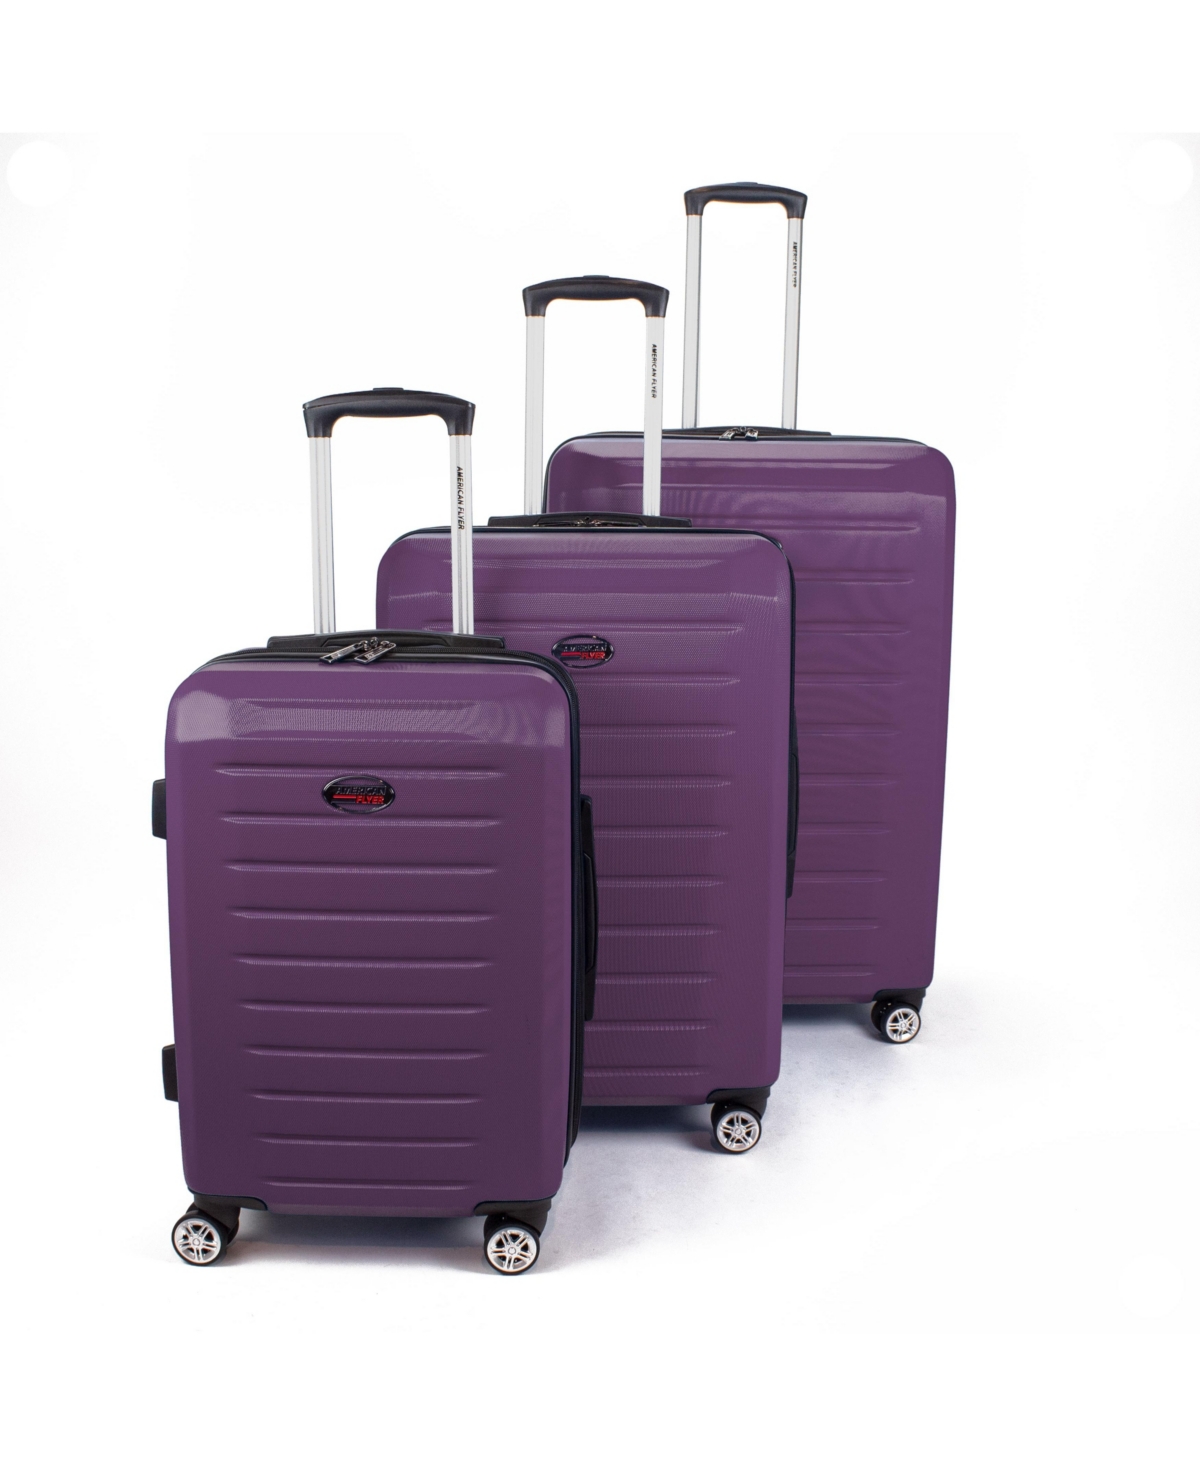 Seger 3-Piece Hardside Luggage Set - Plum